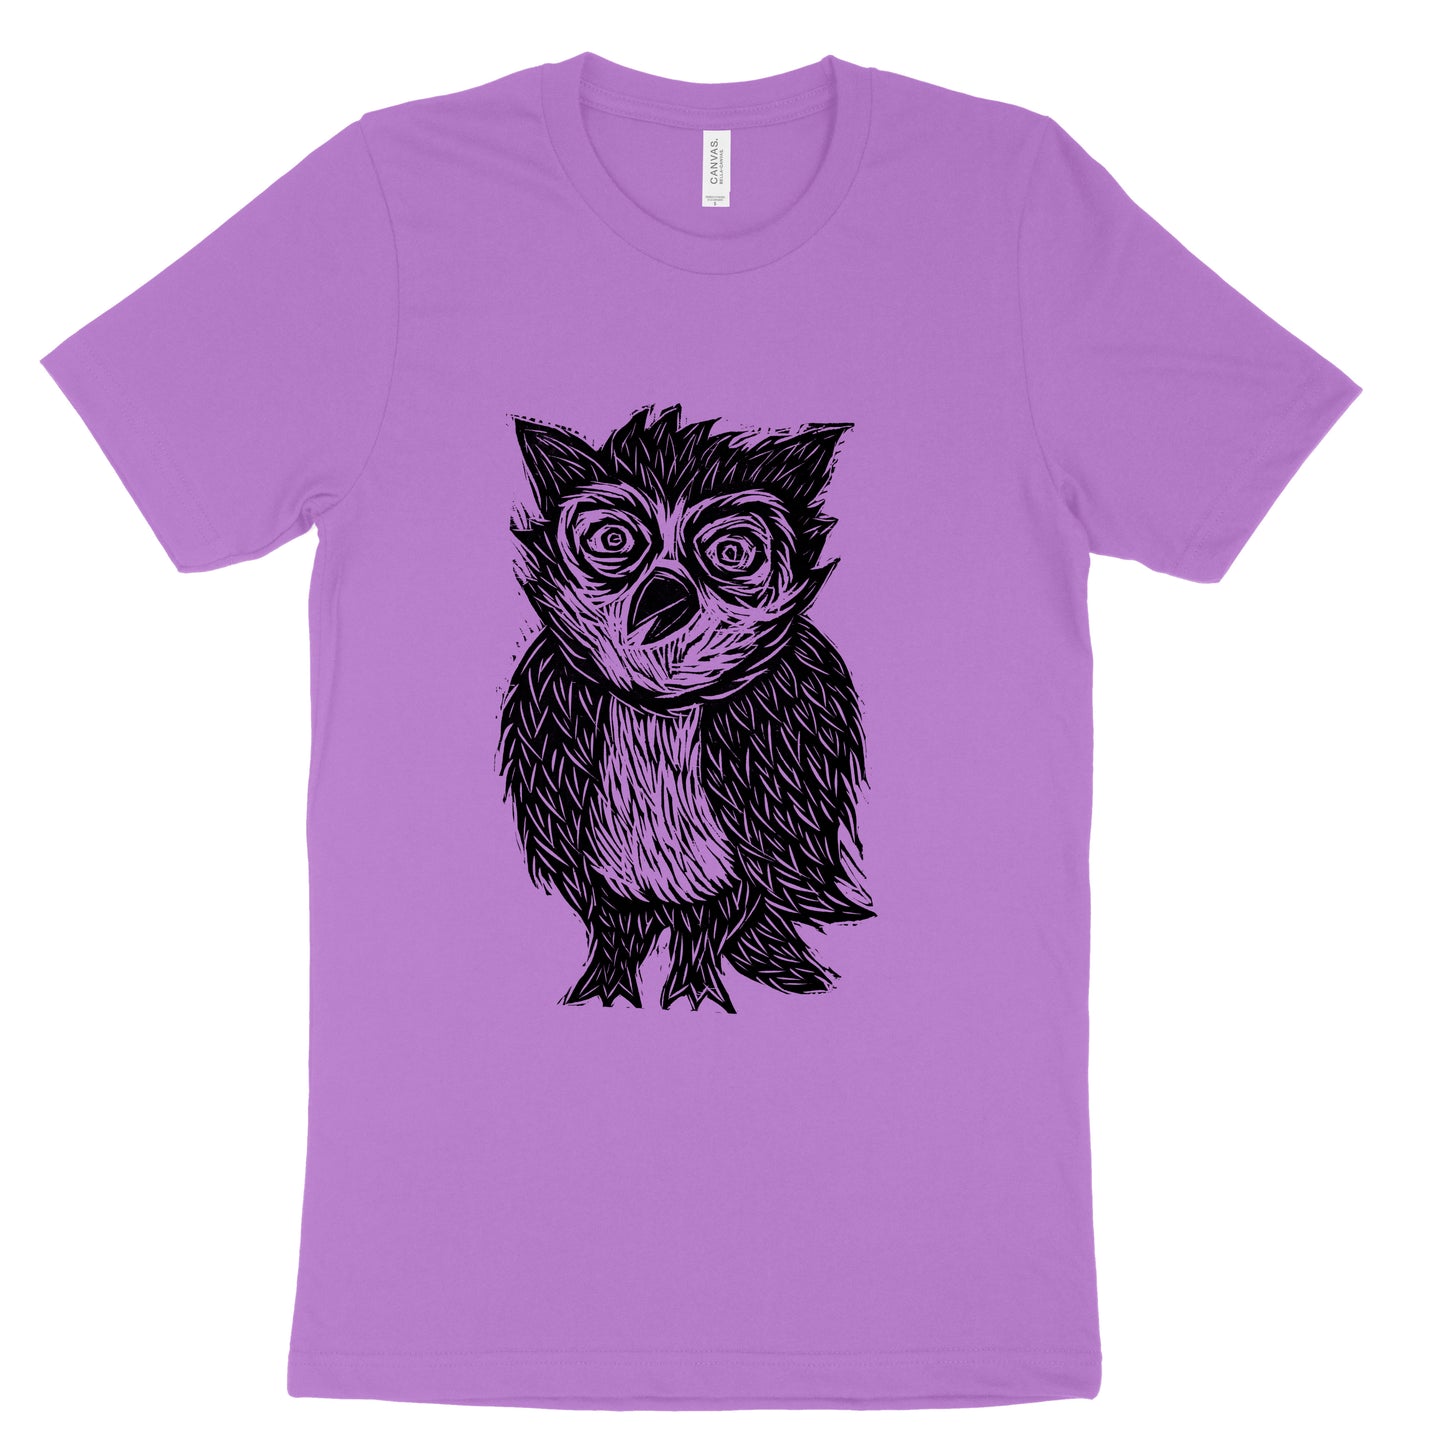 Owl Woodcut Printed T-Shirt